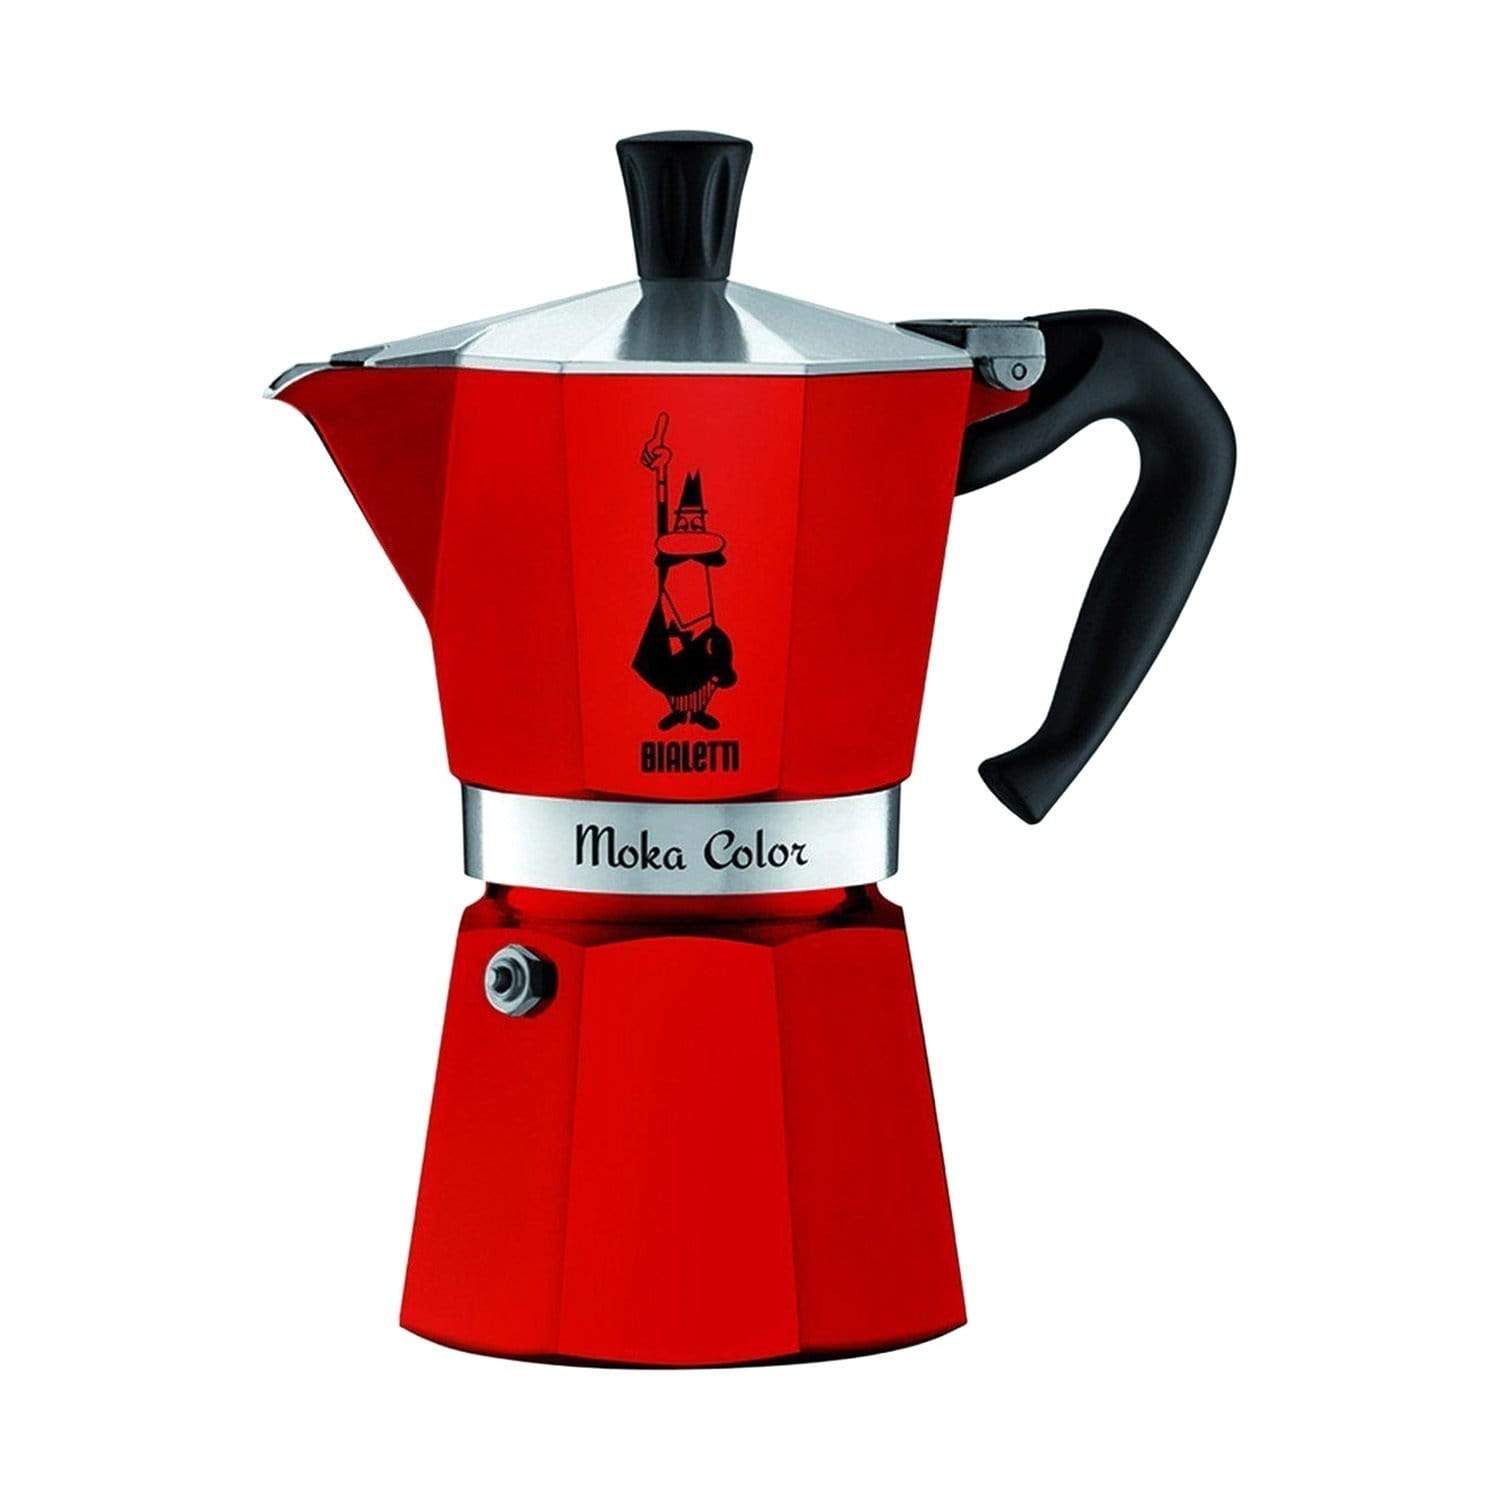 Bialetti Moka Express Coffee Maker - Red , 3 Cups - 4942 - Jashanmal Home